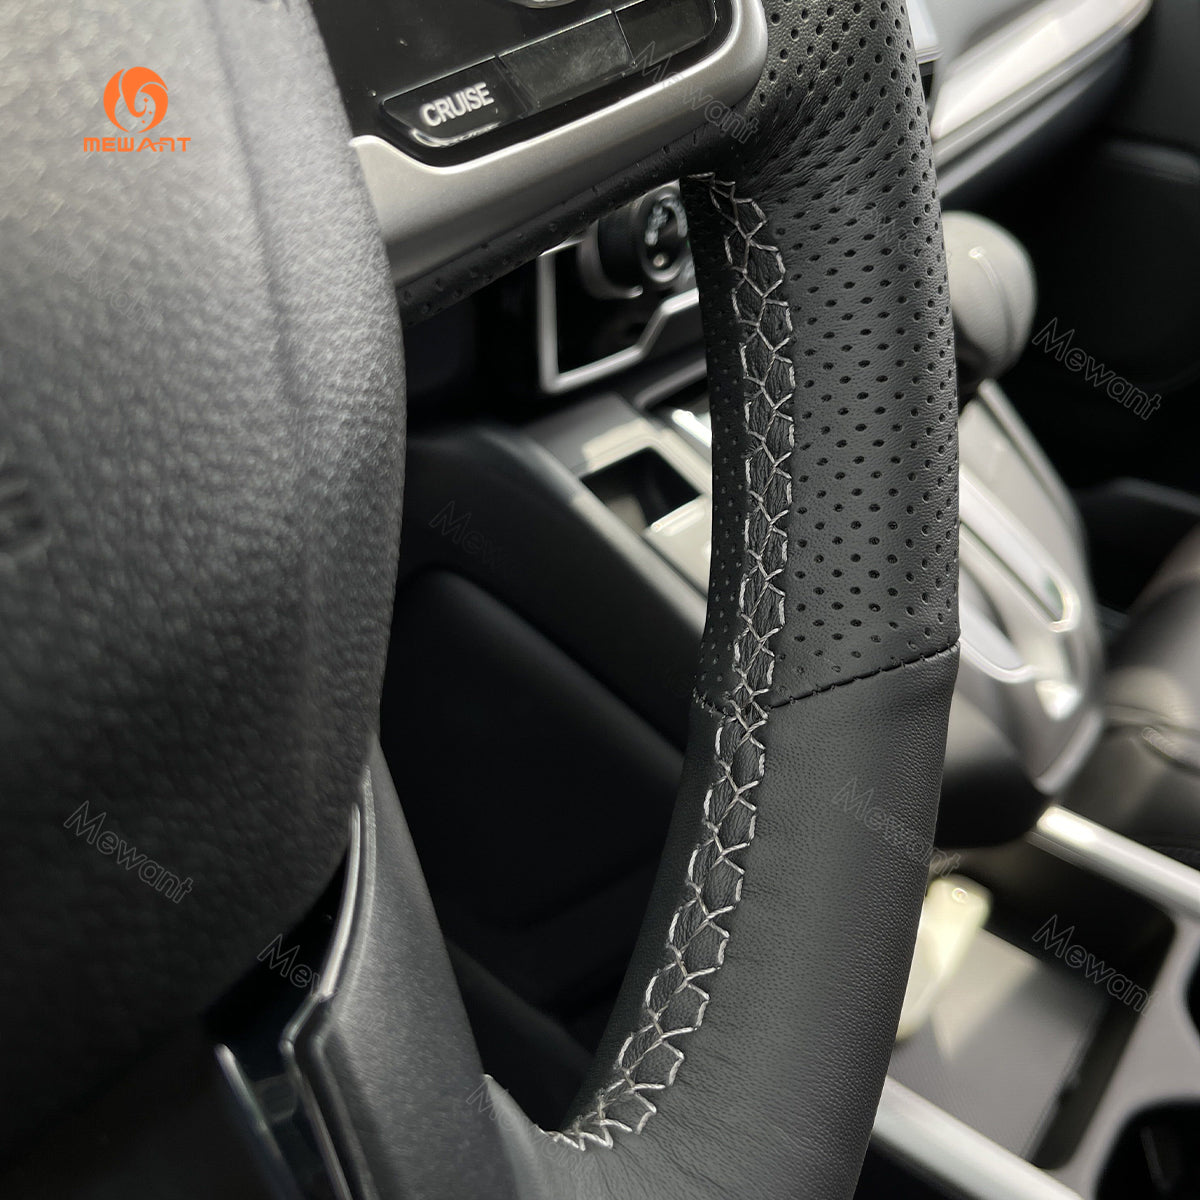 MEWANT DIY Black Leather Suede Carbon Fiber Car Steering Wheel Cover for Honda Civic 10 X CR-V CRV Clarity